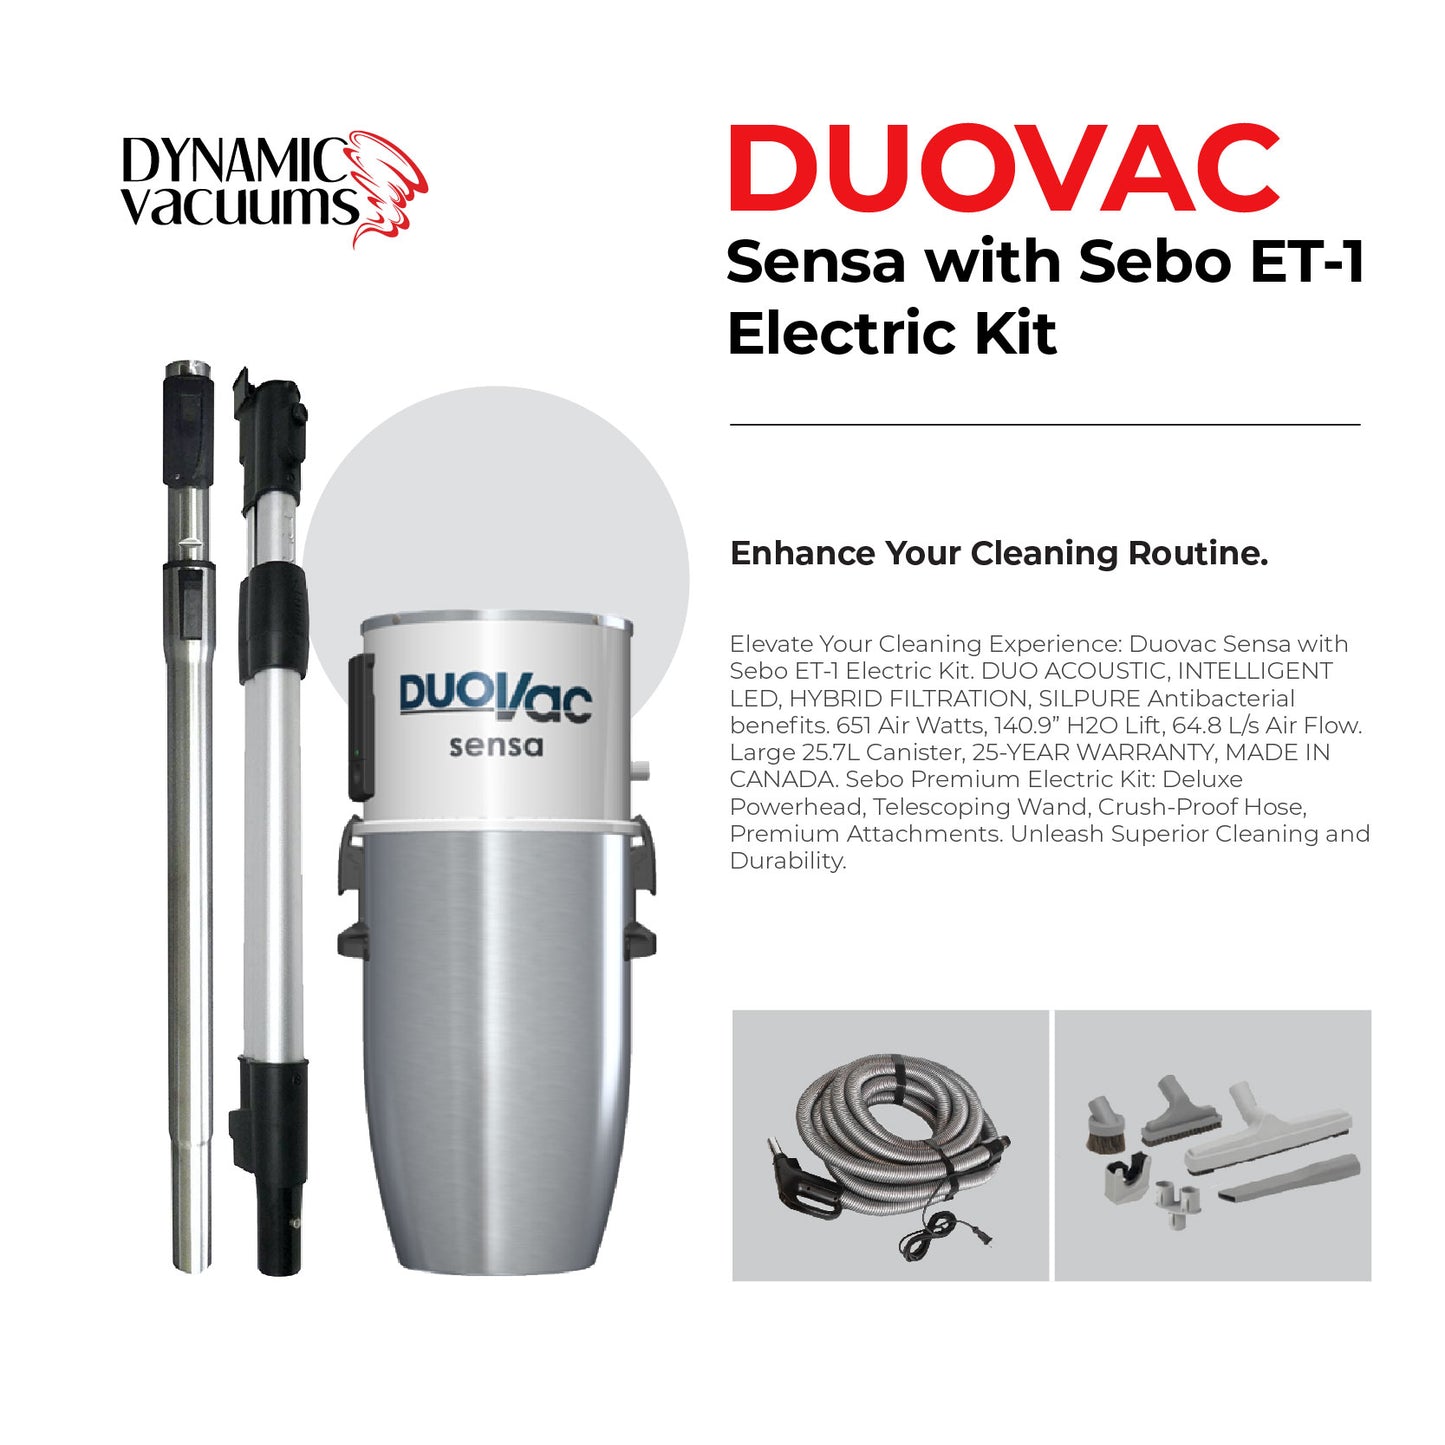 Duovac Sensa with Sebo ET-1 Electric Kit